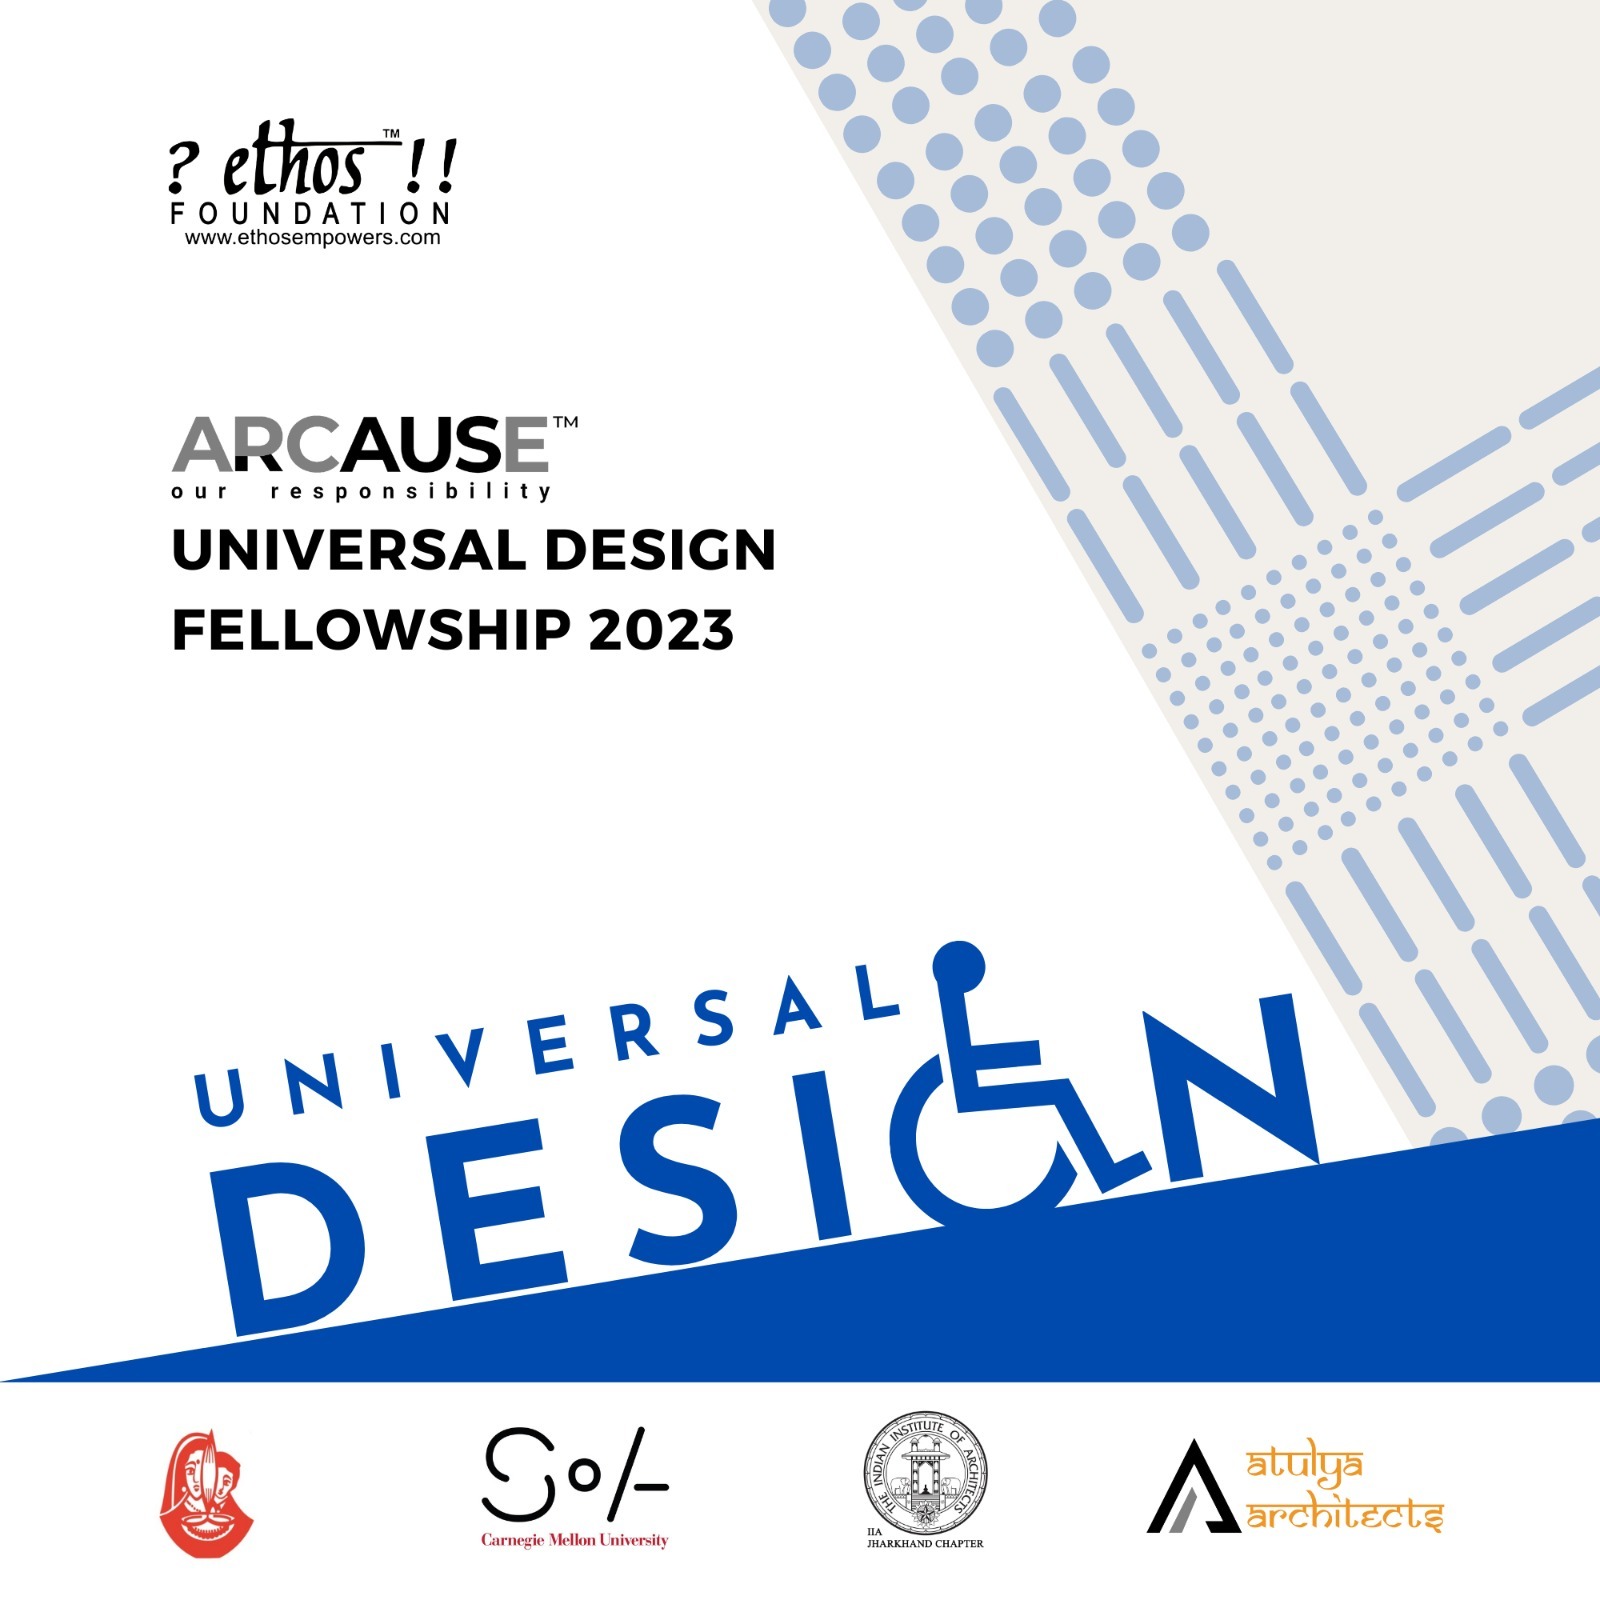 Ethos Foundation announces Universal Design Fellowship 2023, through ARCAUSE